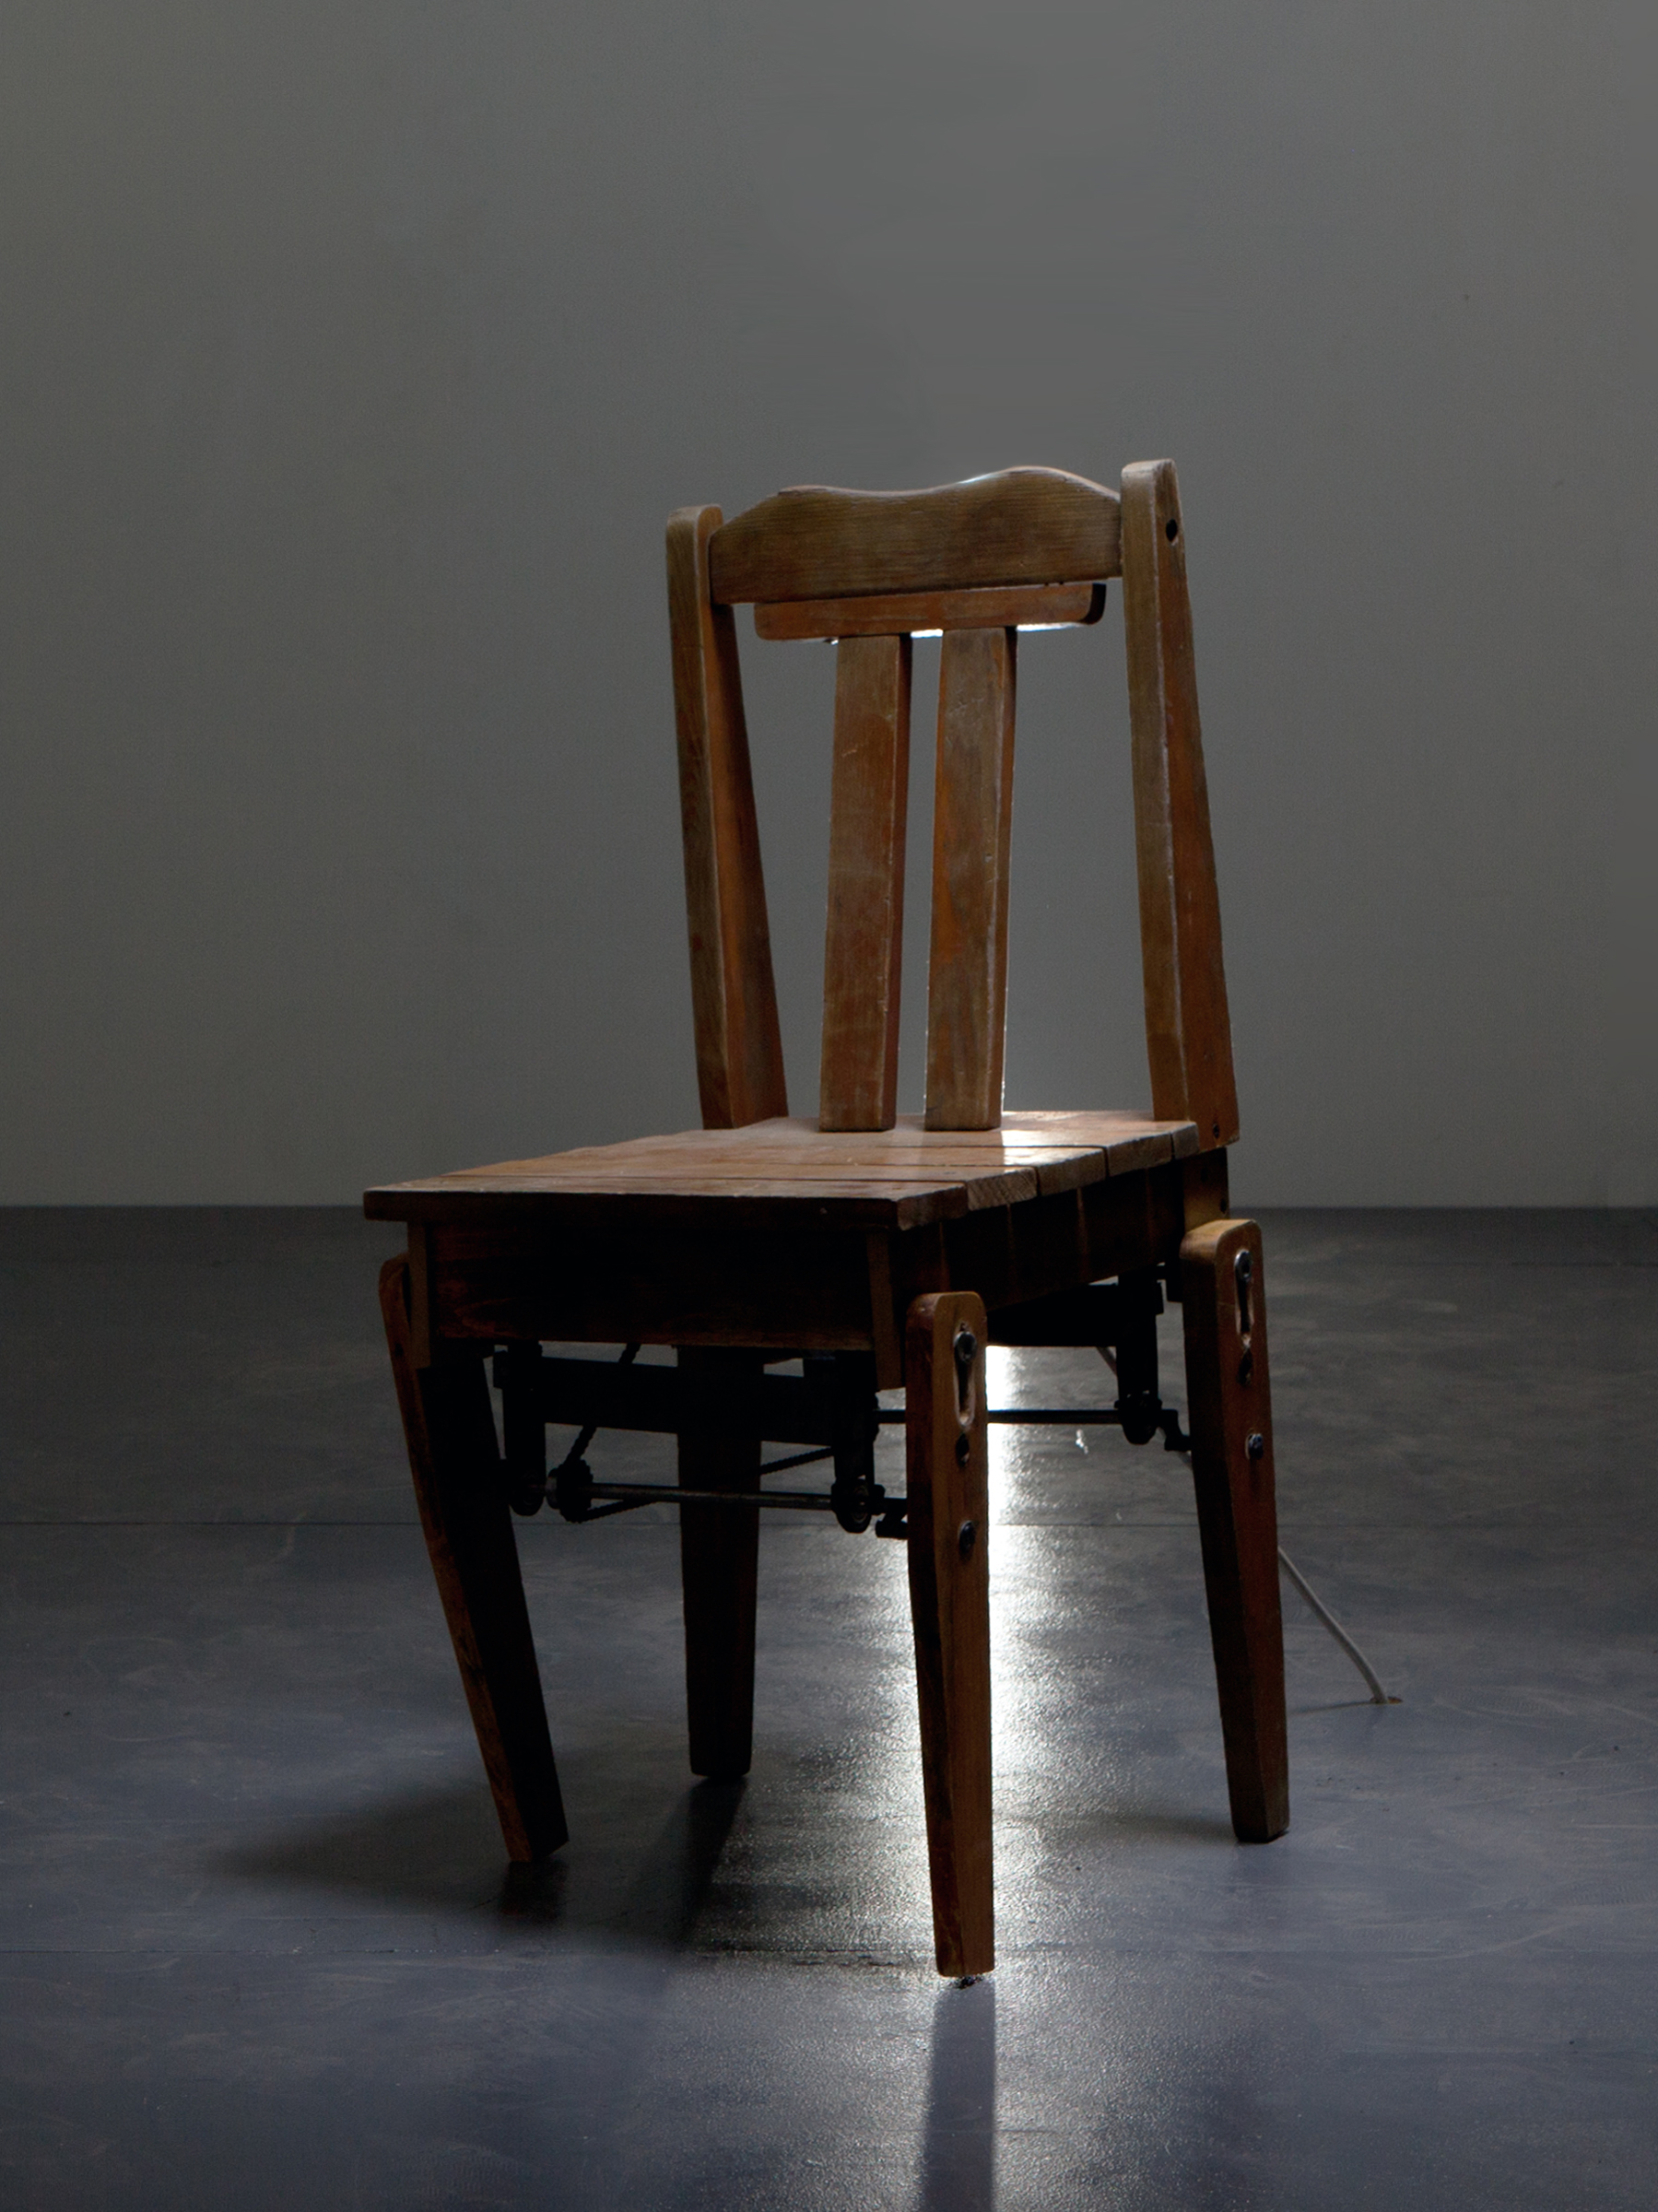 Chair,80x45x60cm(variable),2010,Chair,wood,machinery